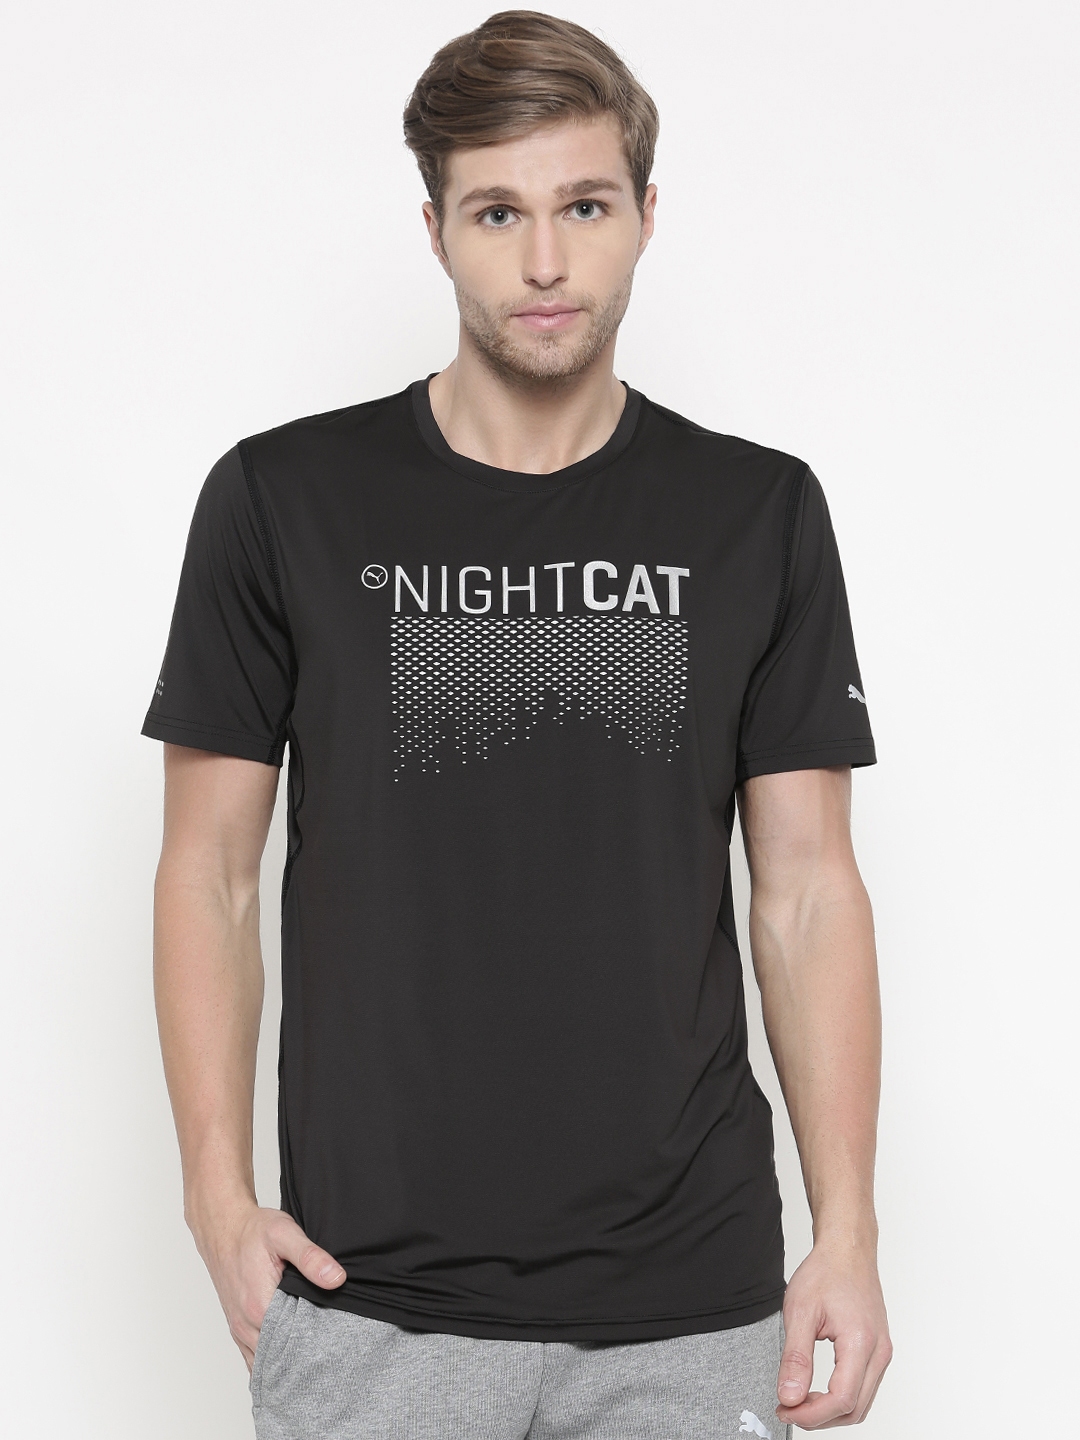 puma nightcat t shirt